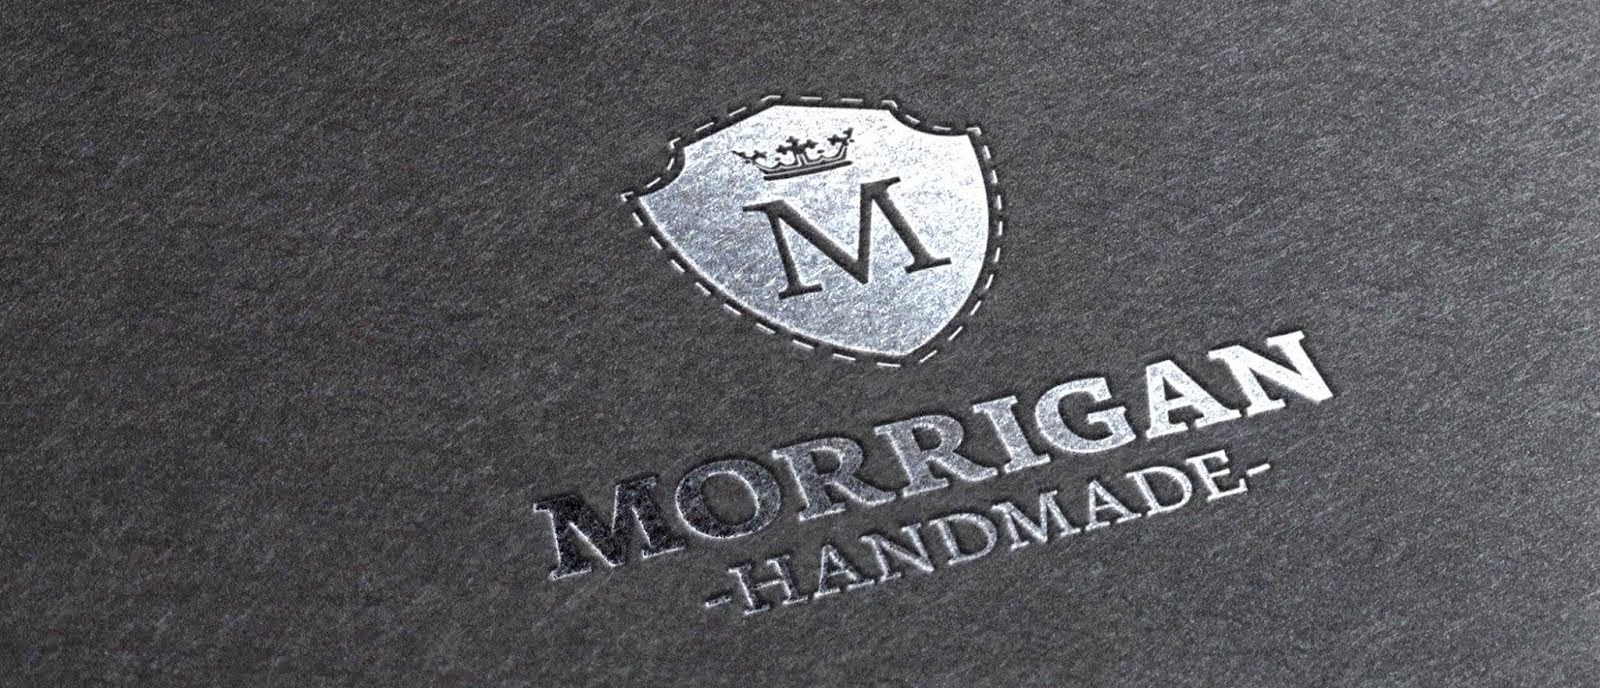 Morrigan-Handmade